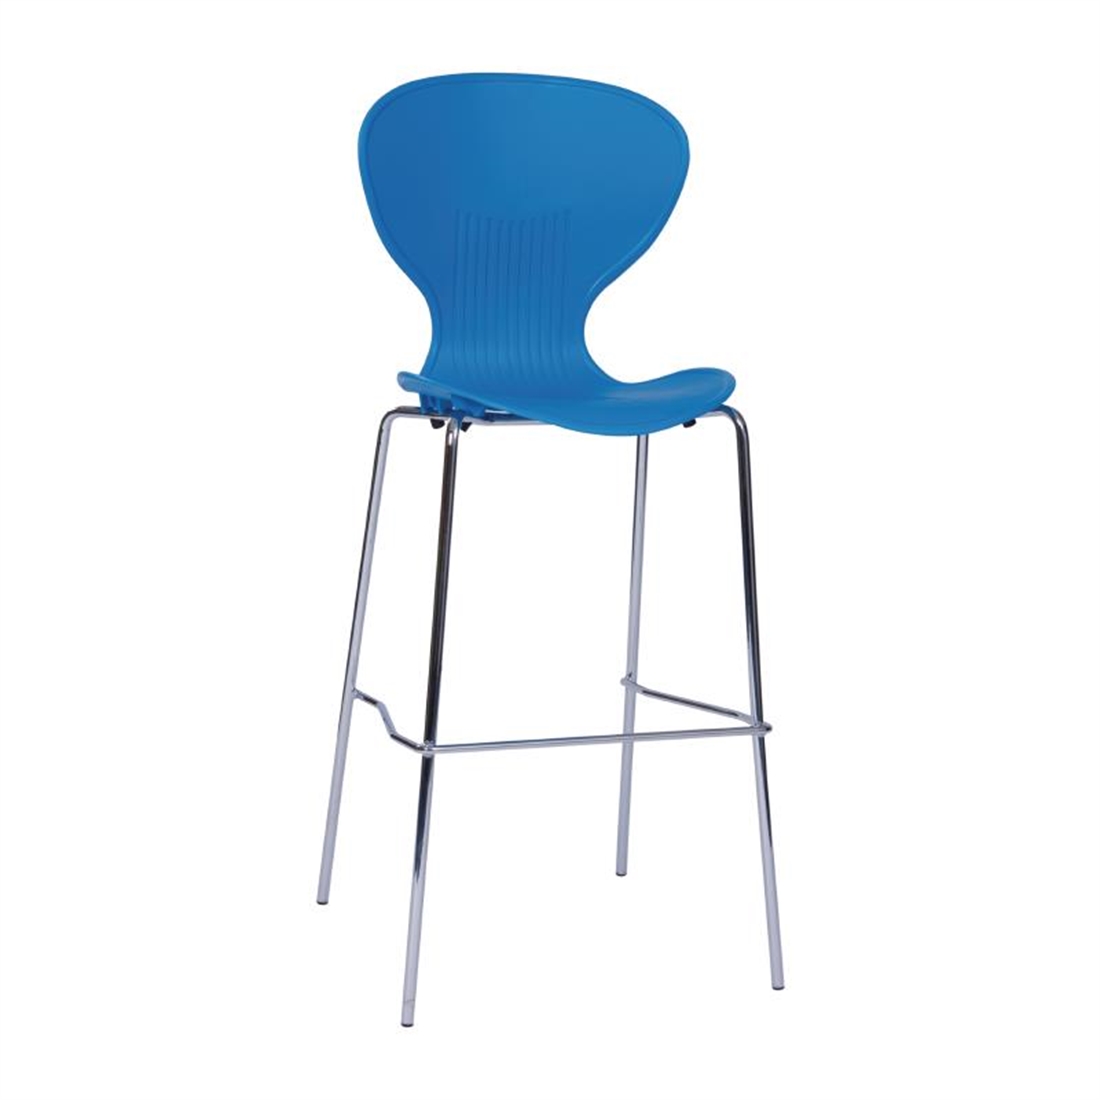 Bolero Blue Stacking PP High stool (Pack of 4)